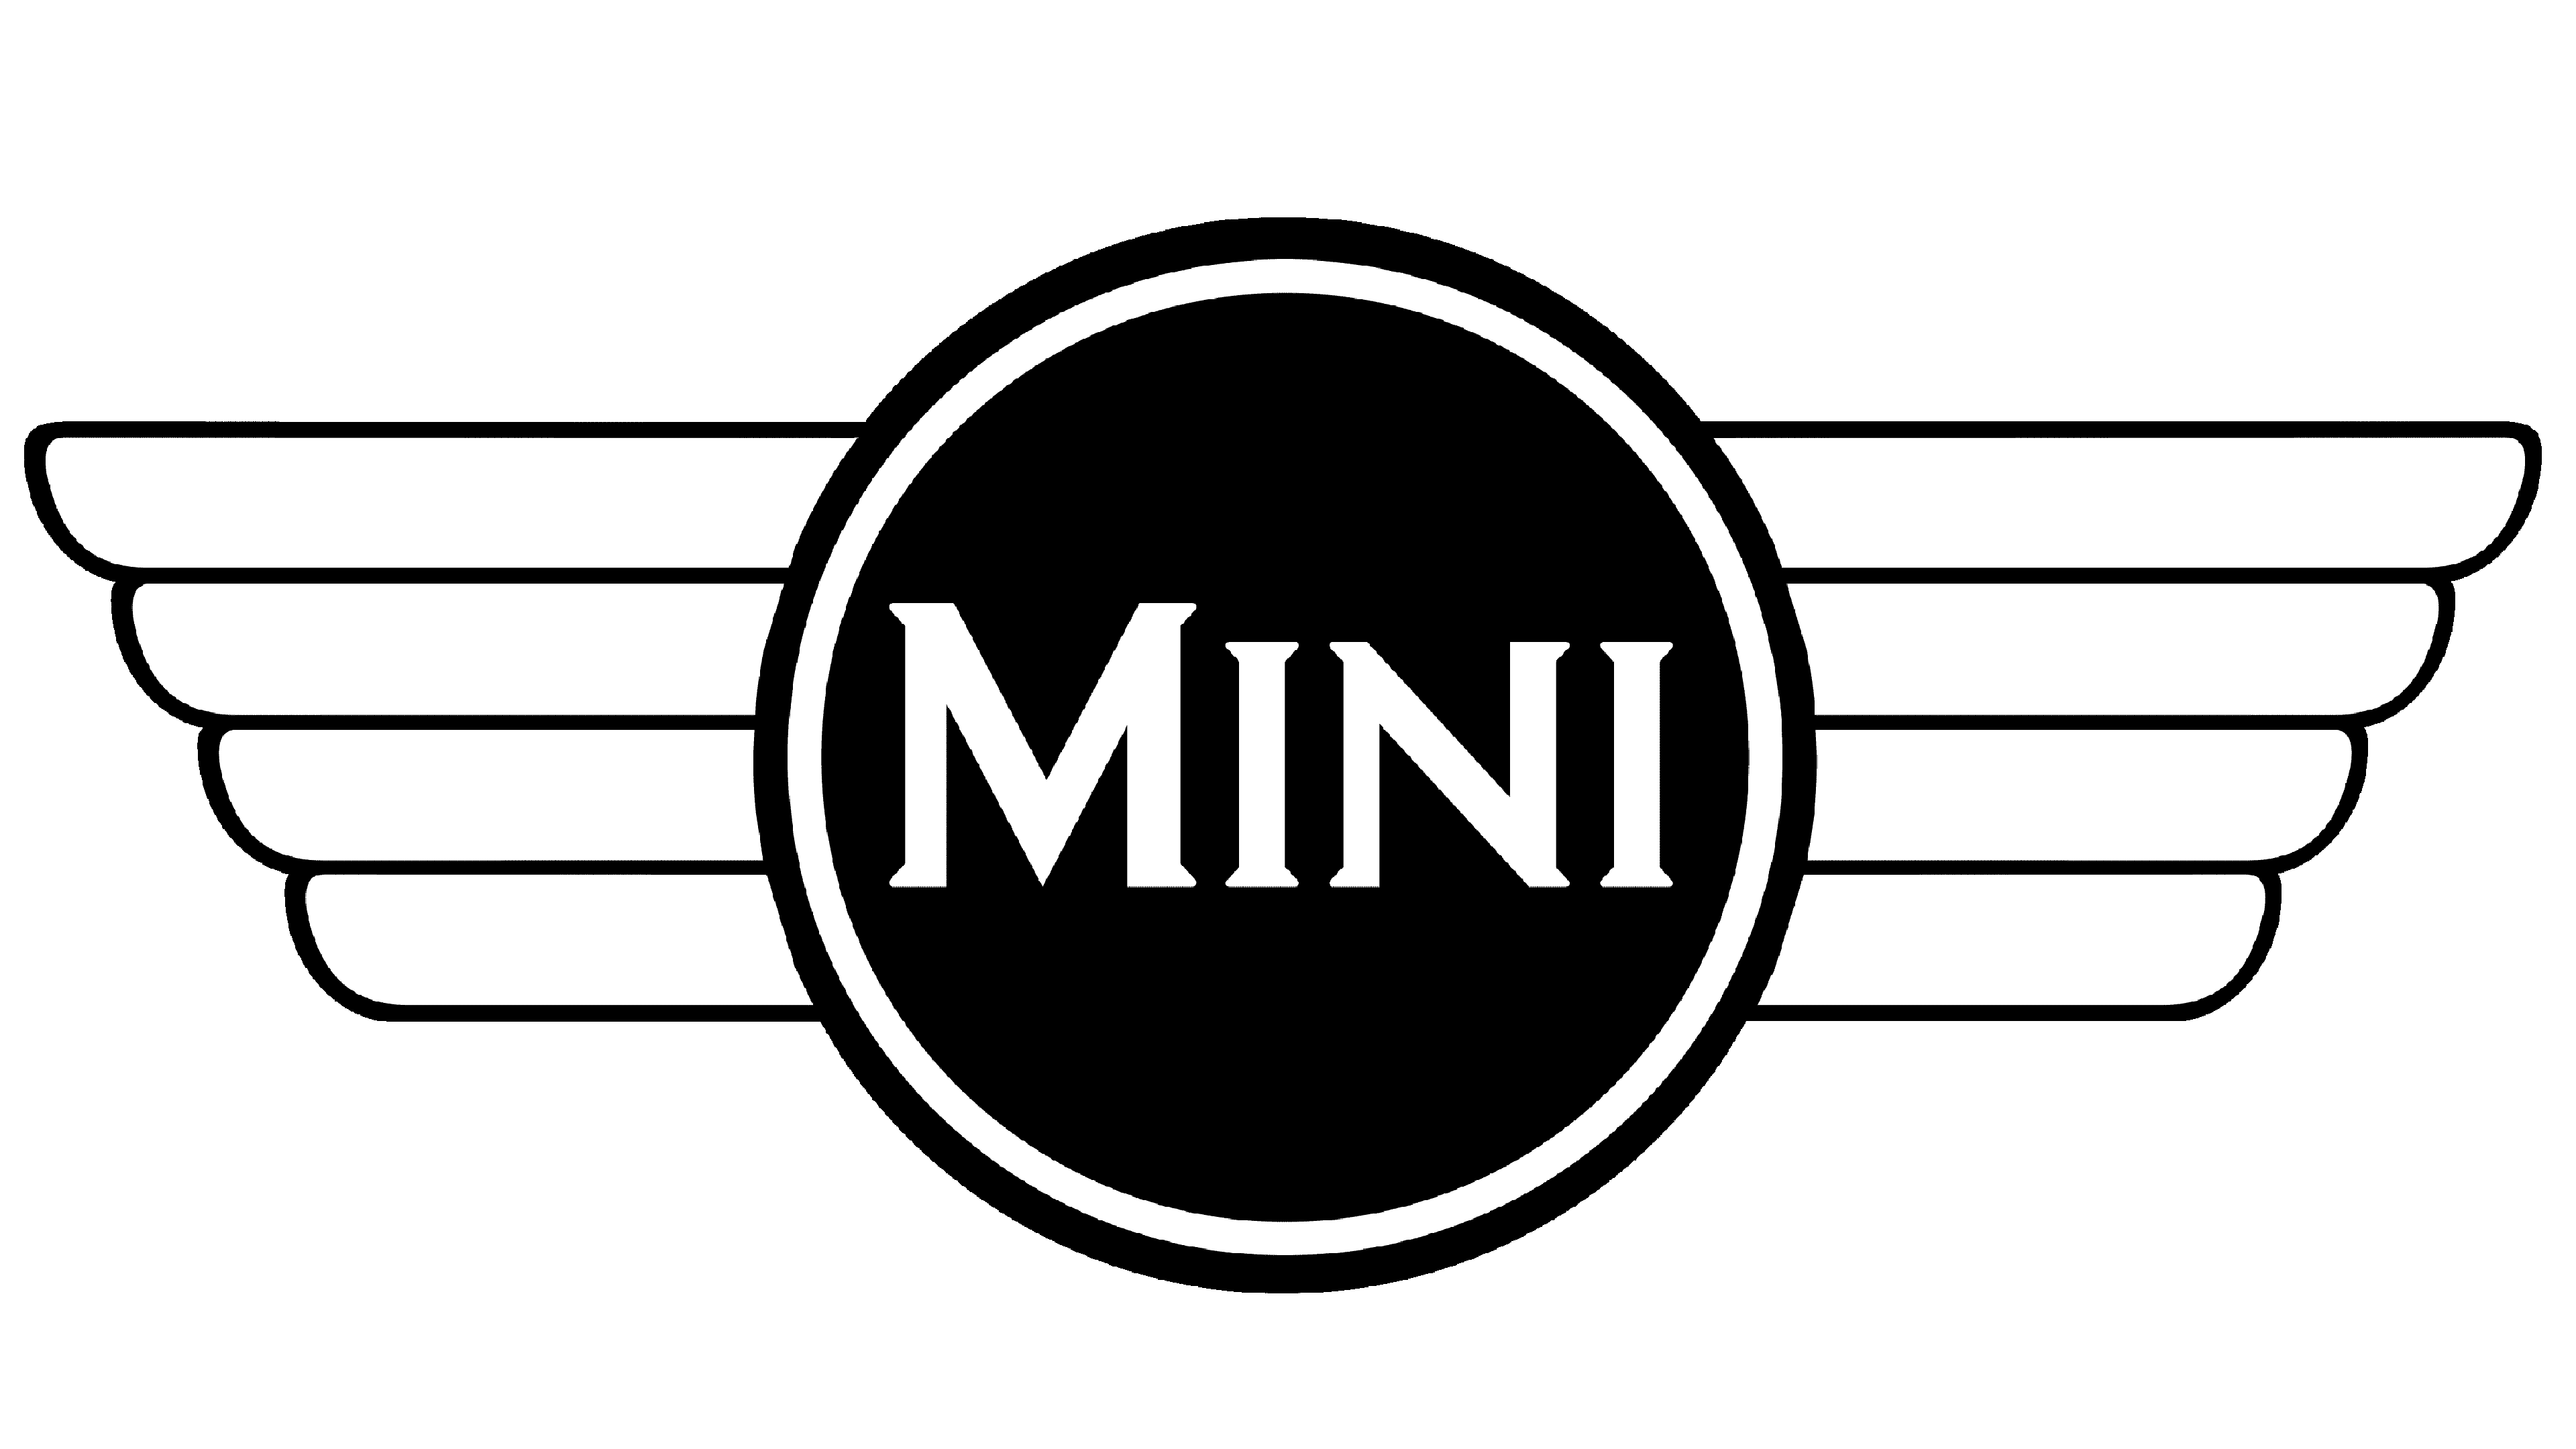 Mini Cooper Logo png images